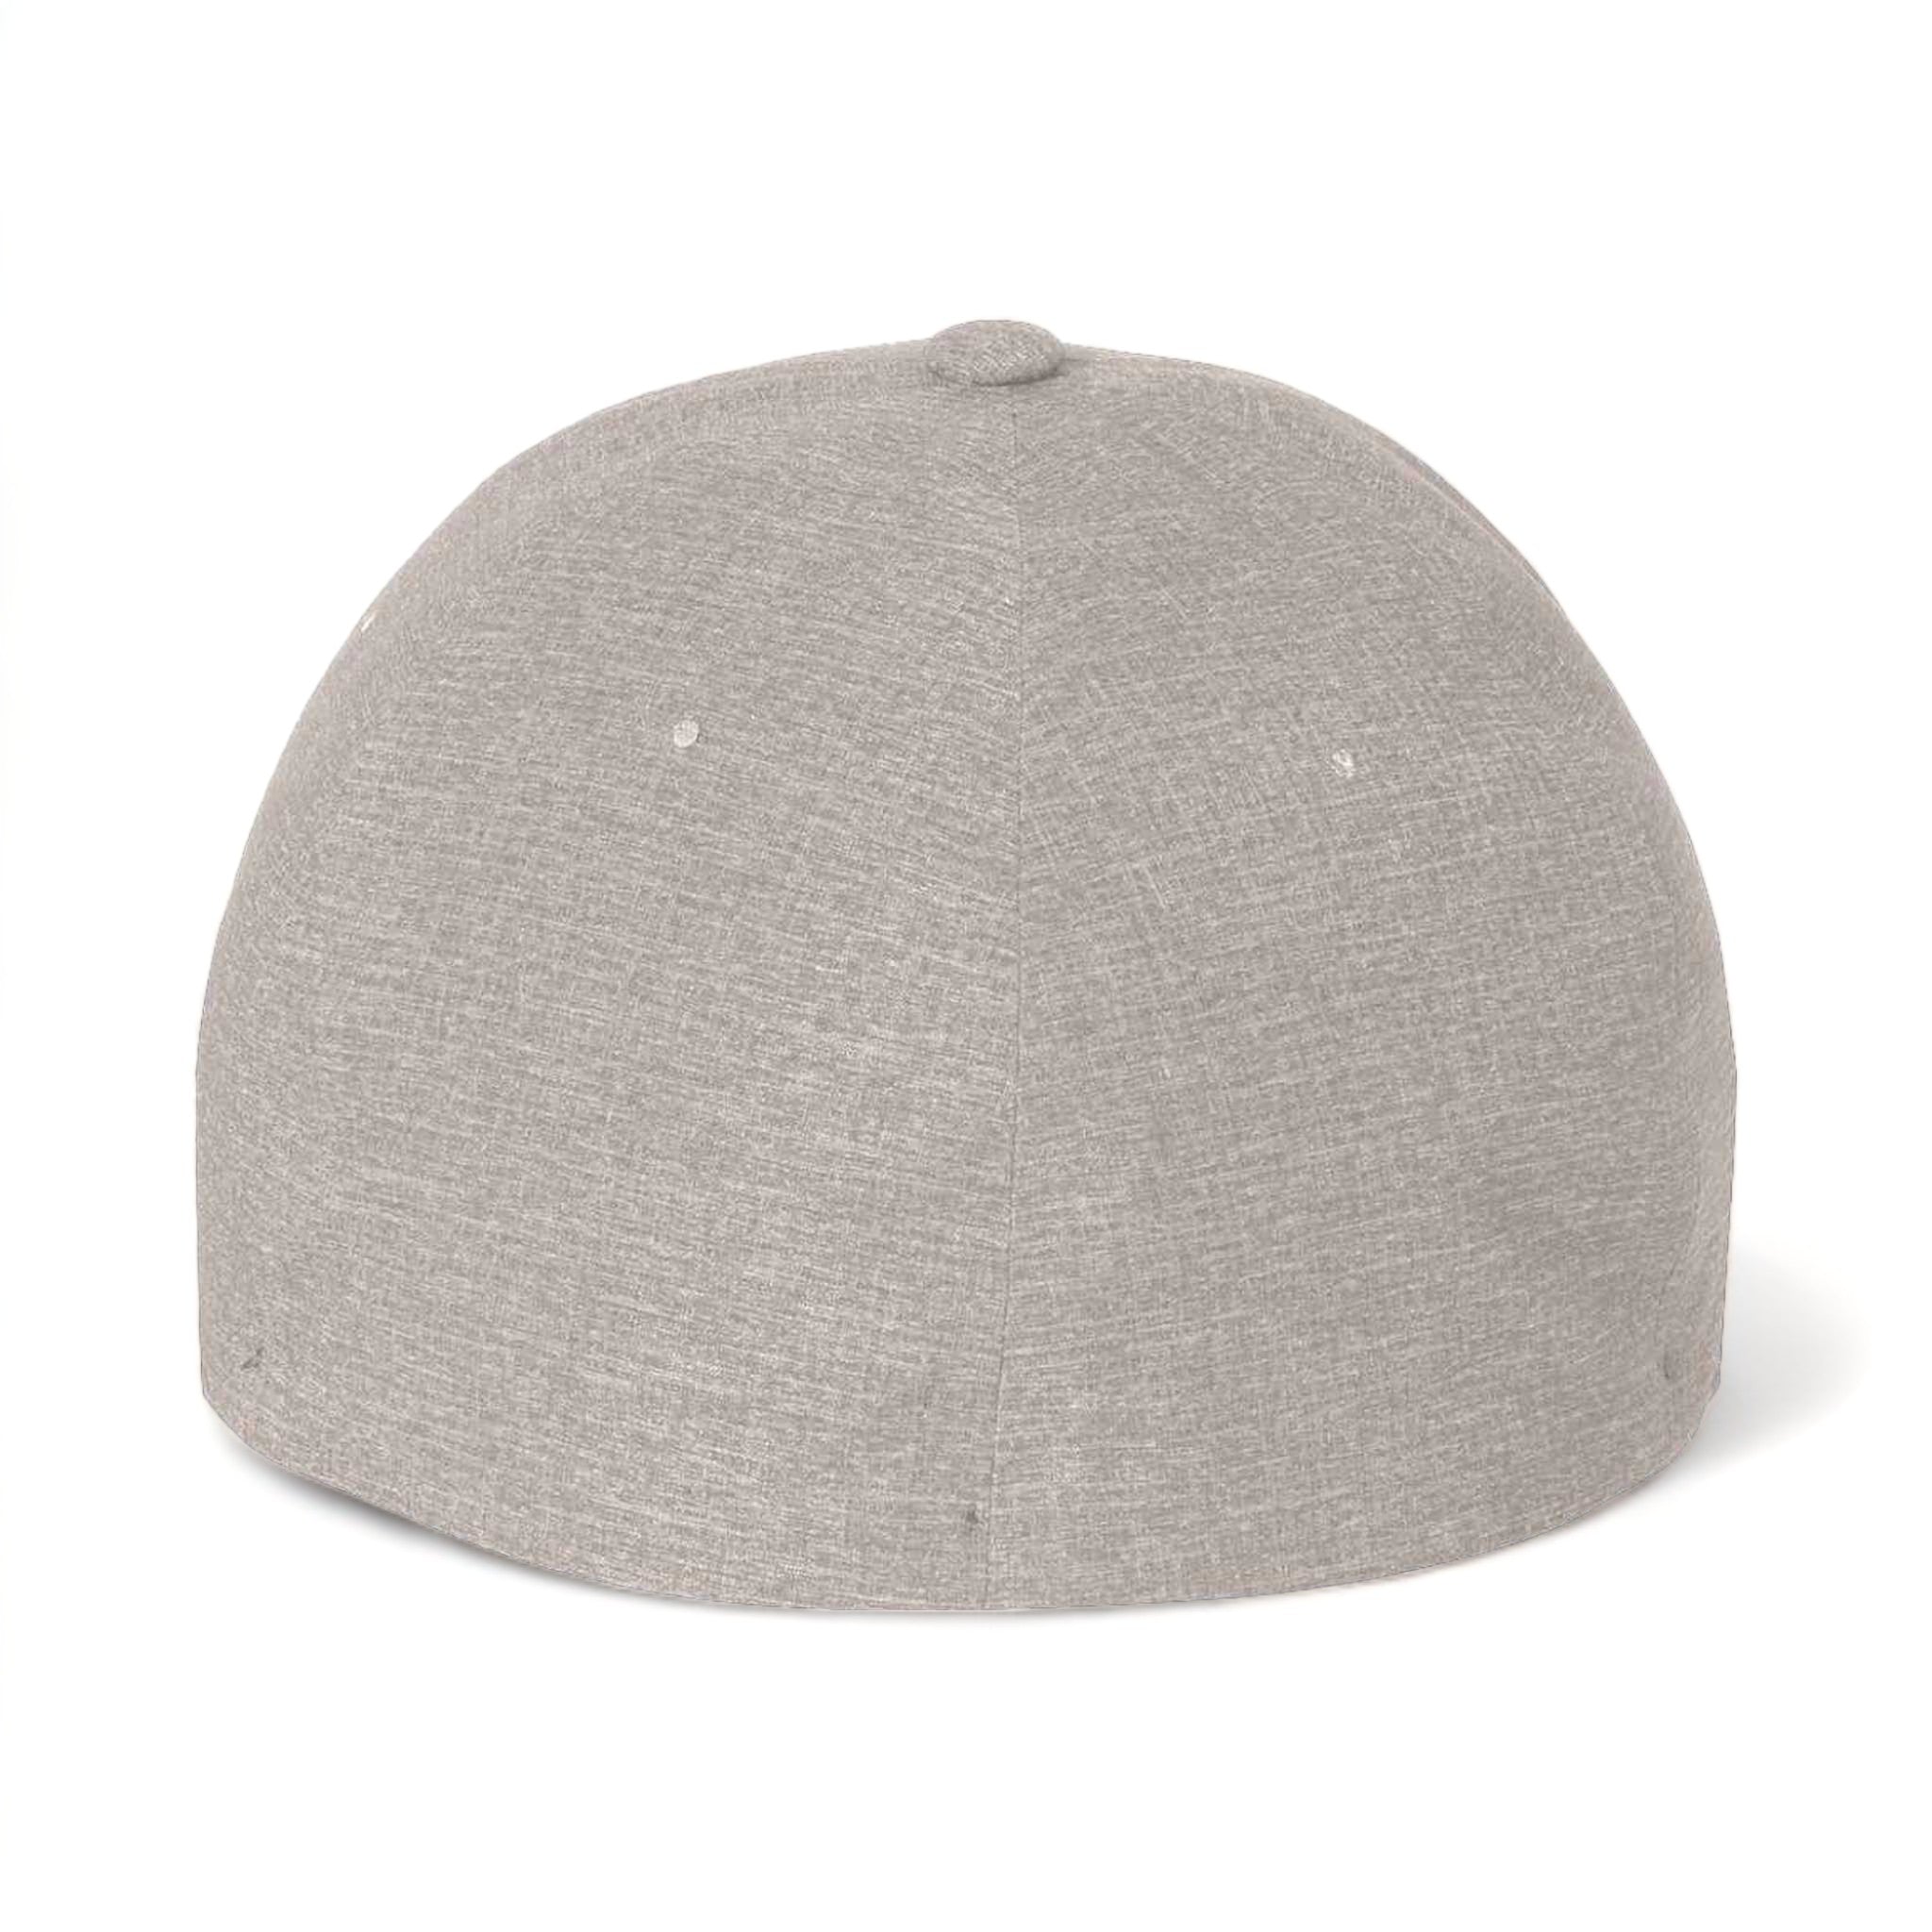 Back view of Flexfit 180 custom hat in mélange silver